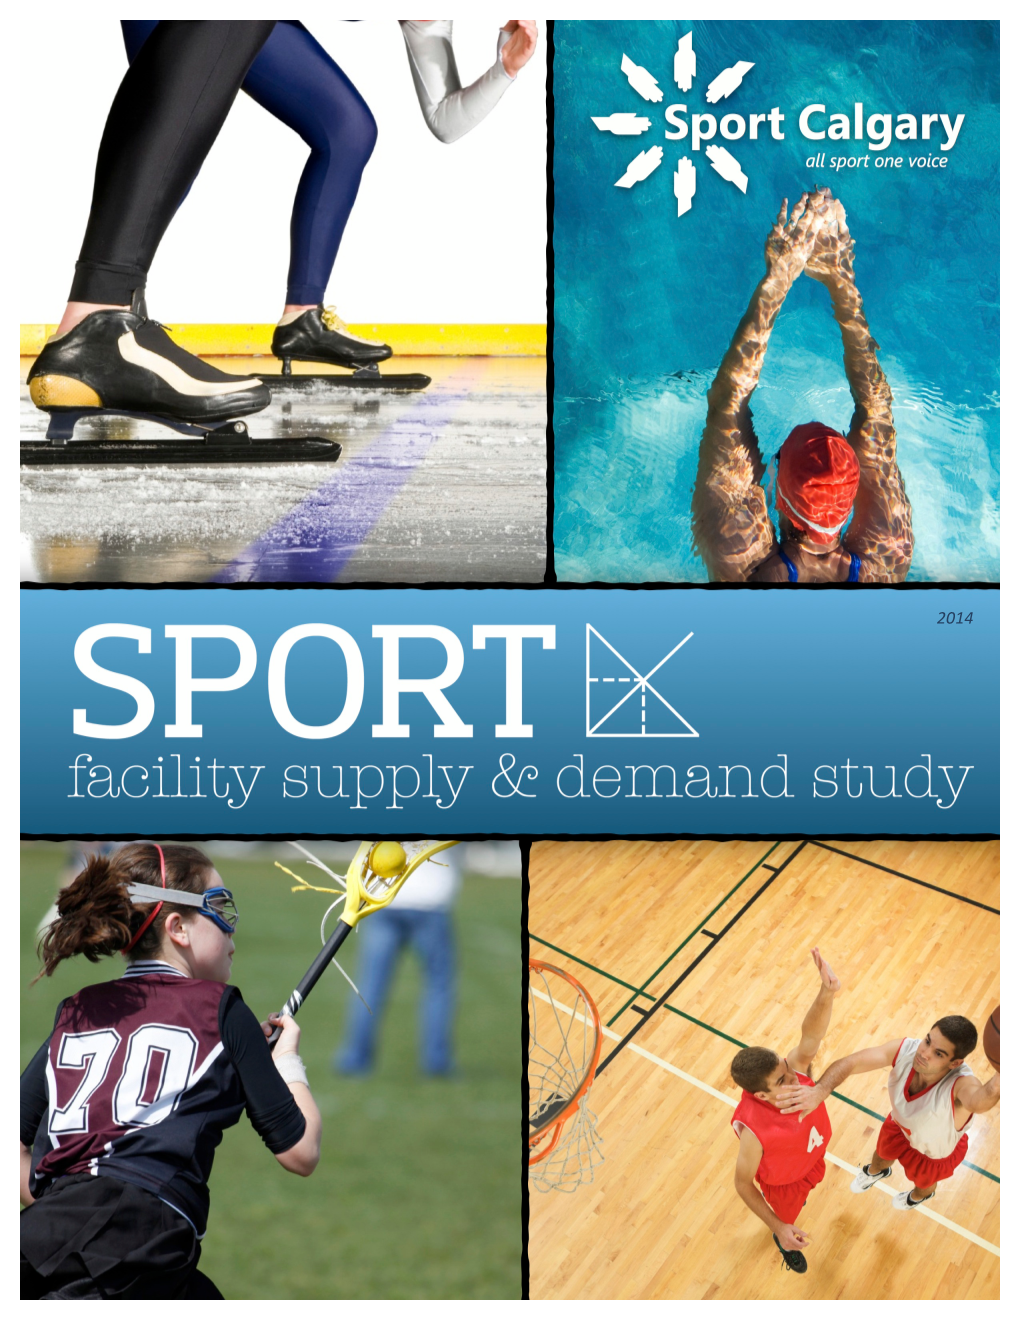 Sport Facility Supply & Demand Study Report